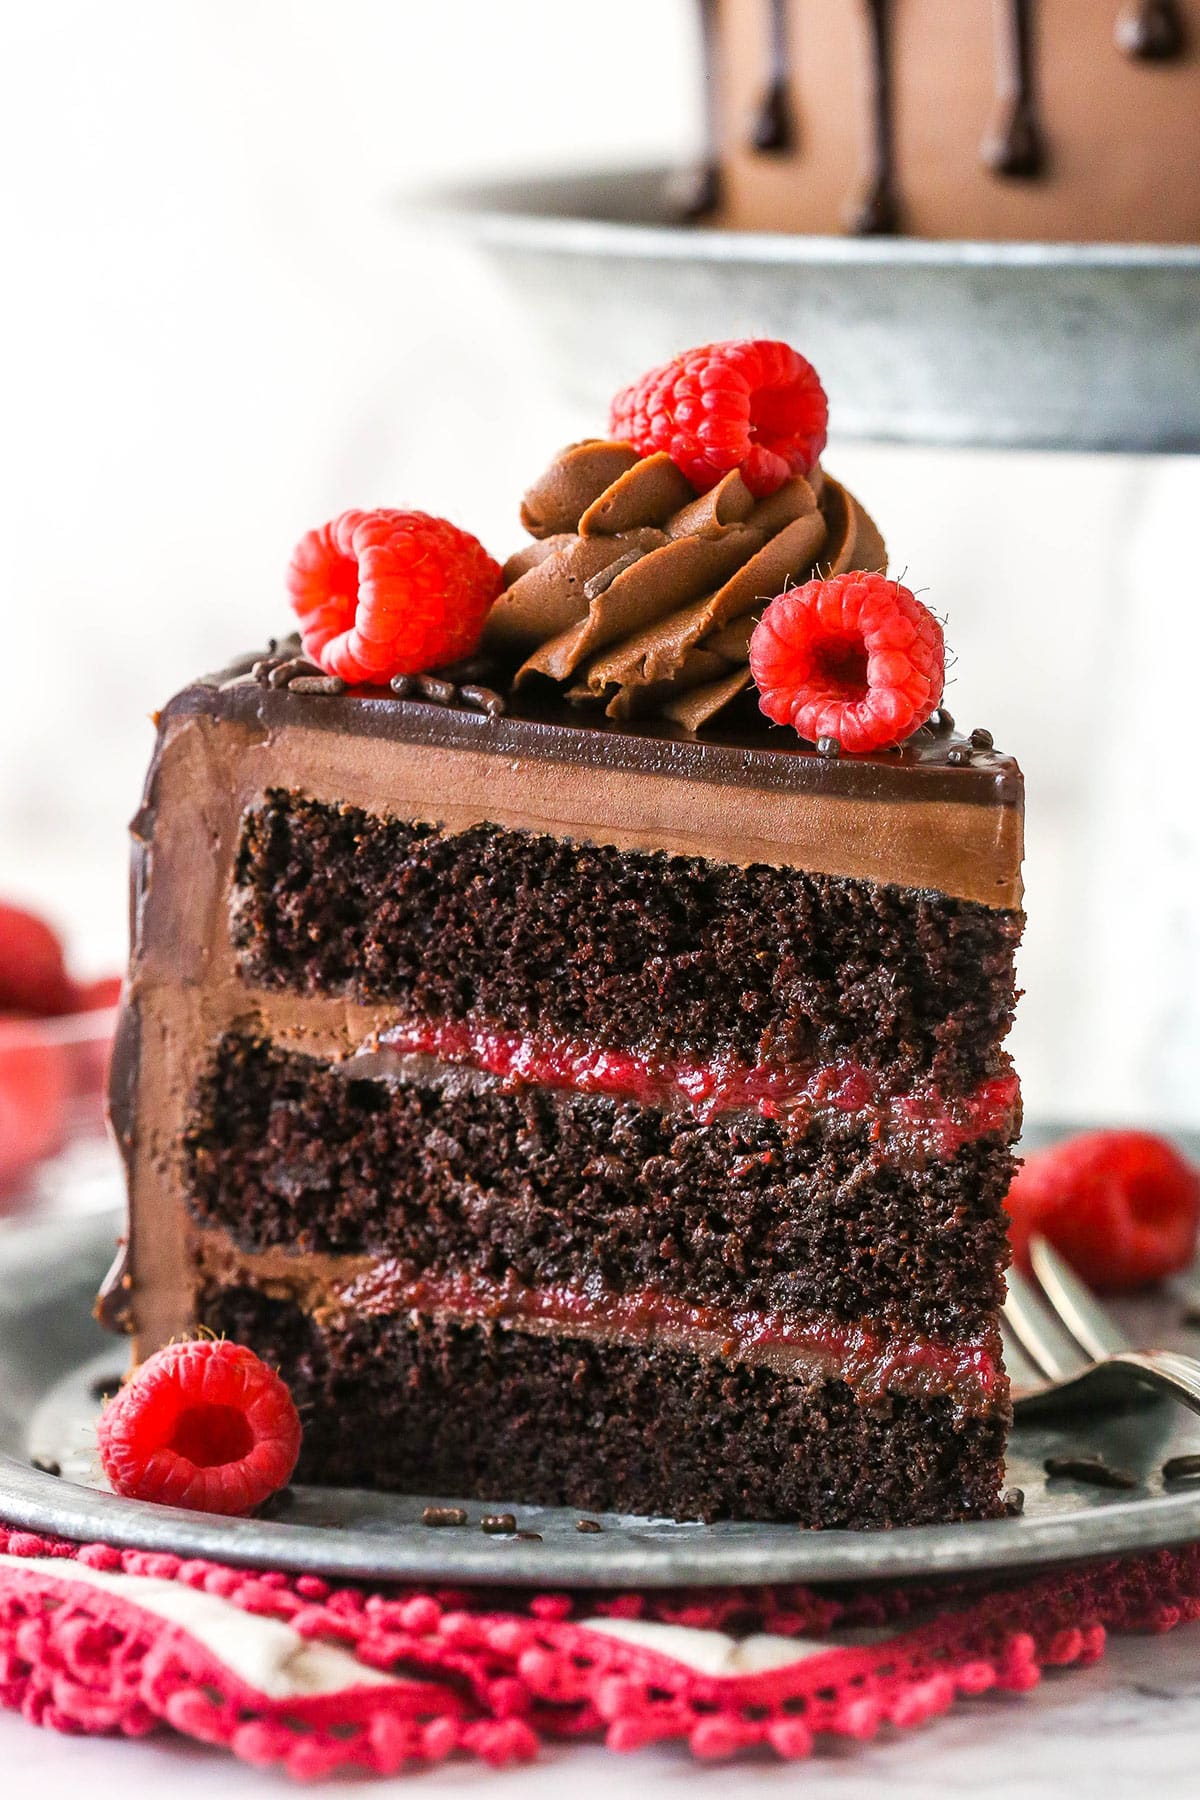 Slice of cake stock image. Image of dessert, icing, fruit - 28979015